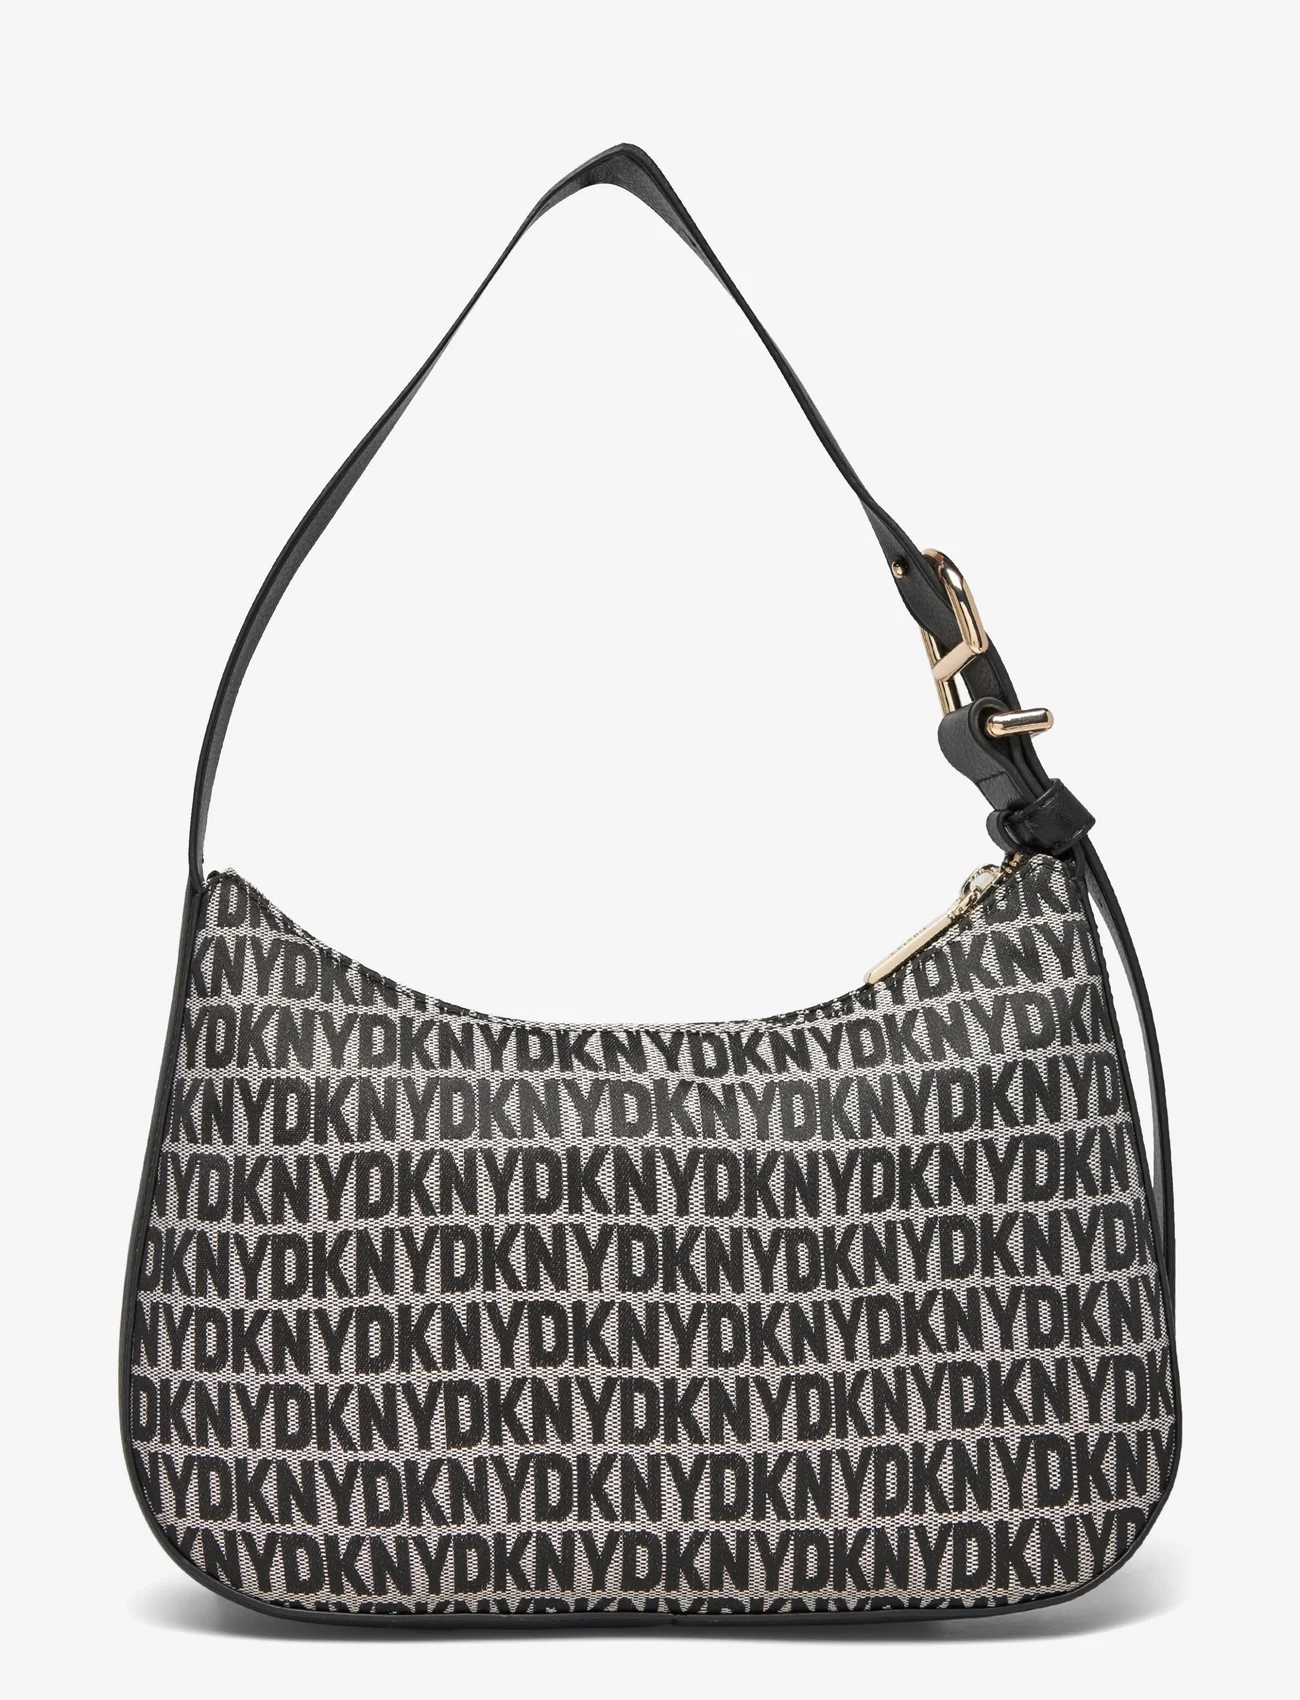 DKNY Bags - DEENA TZ SHOULDER BAG - dzimšanas dienas dāvanas - xlb - bk logo-bk - 1